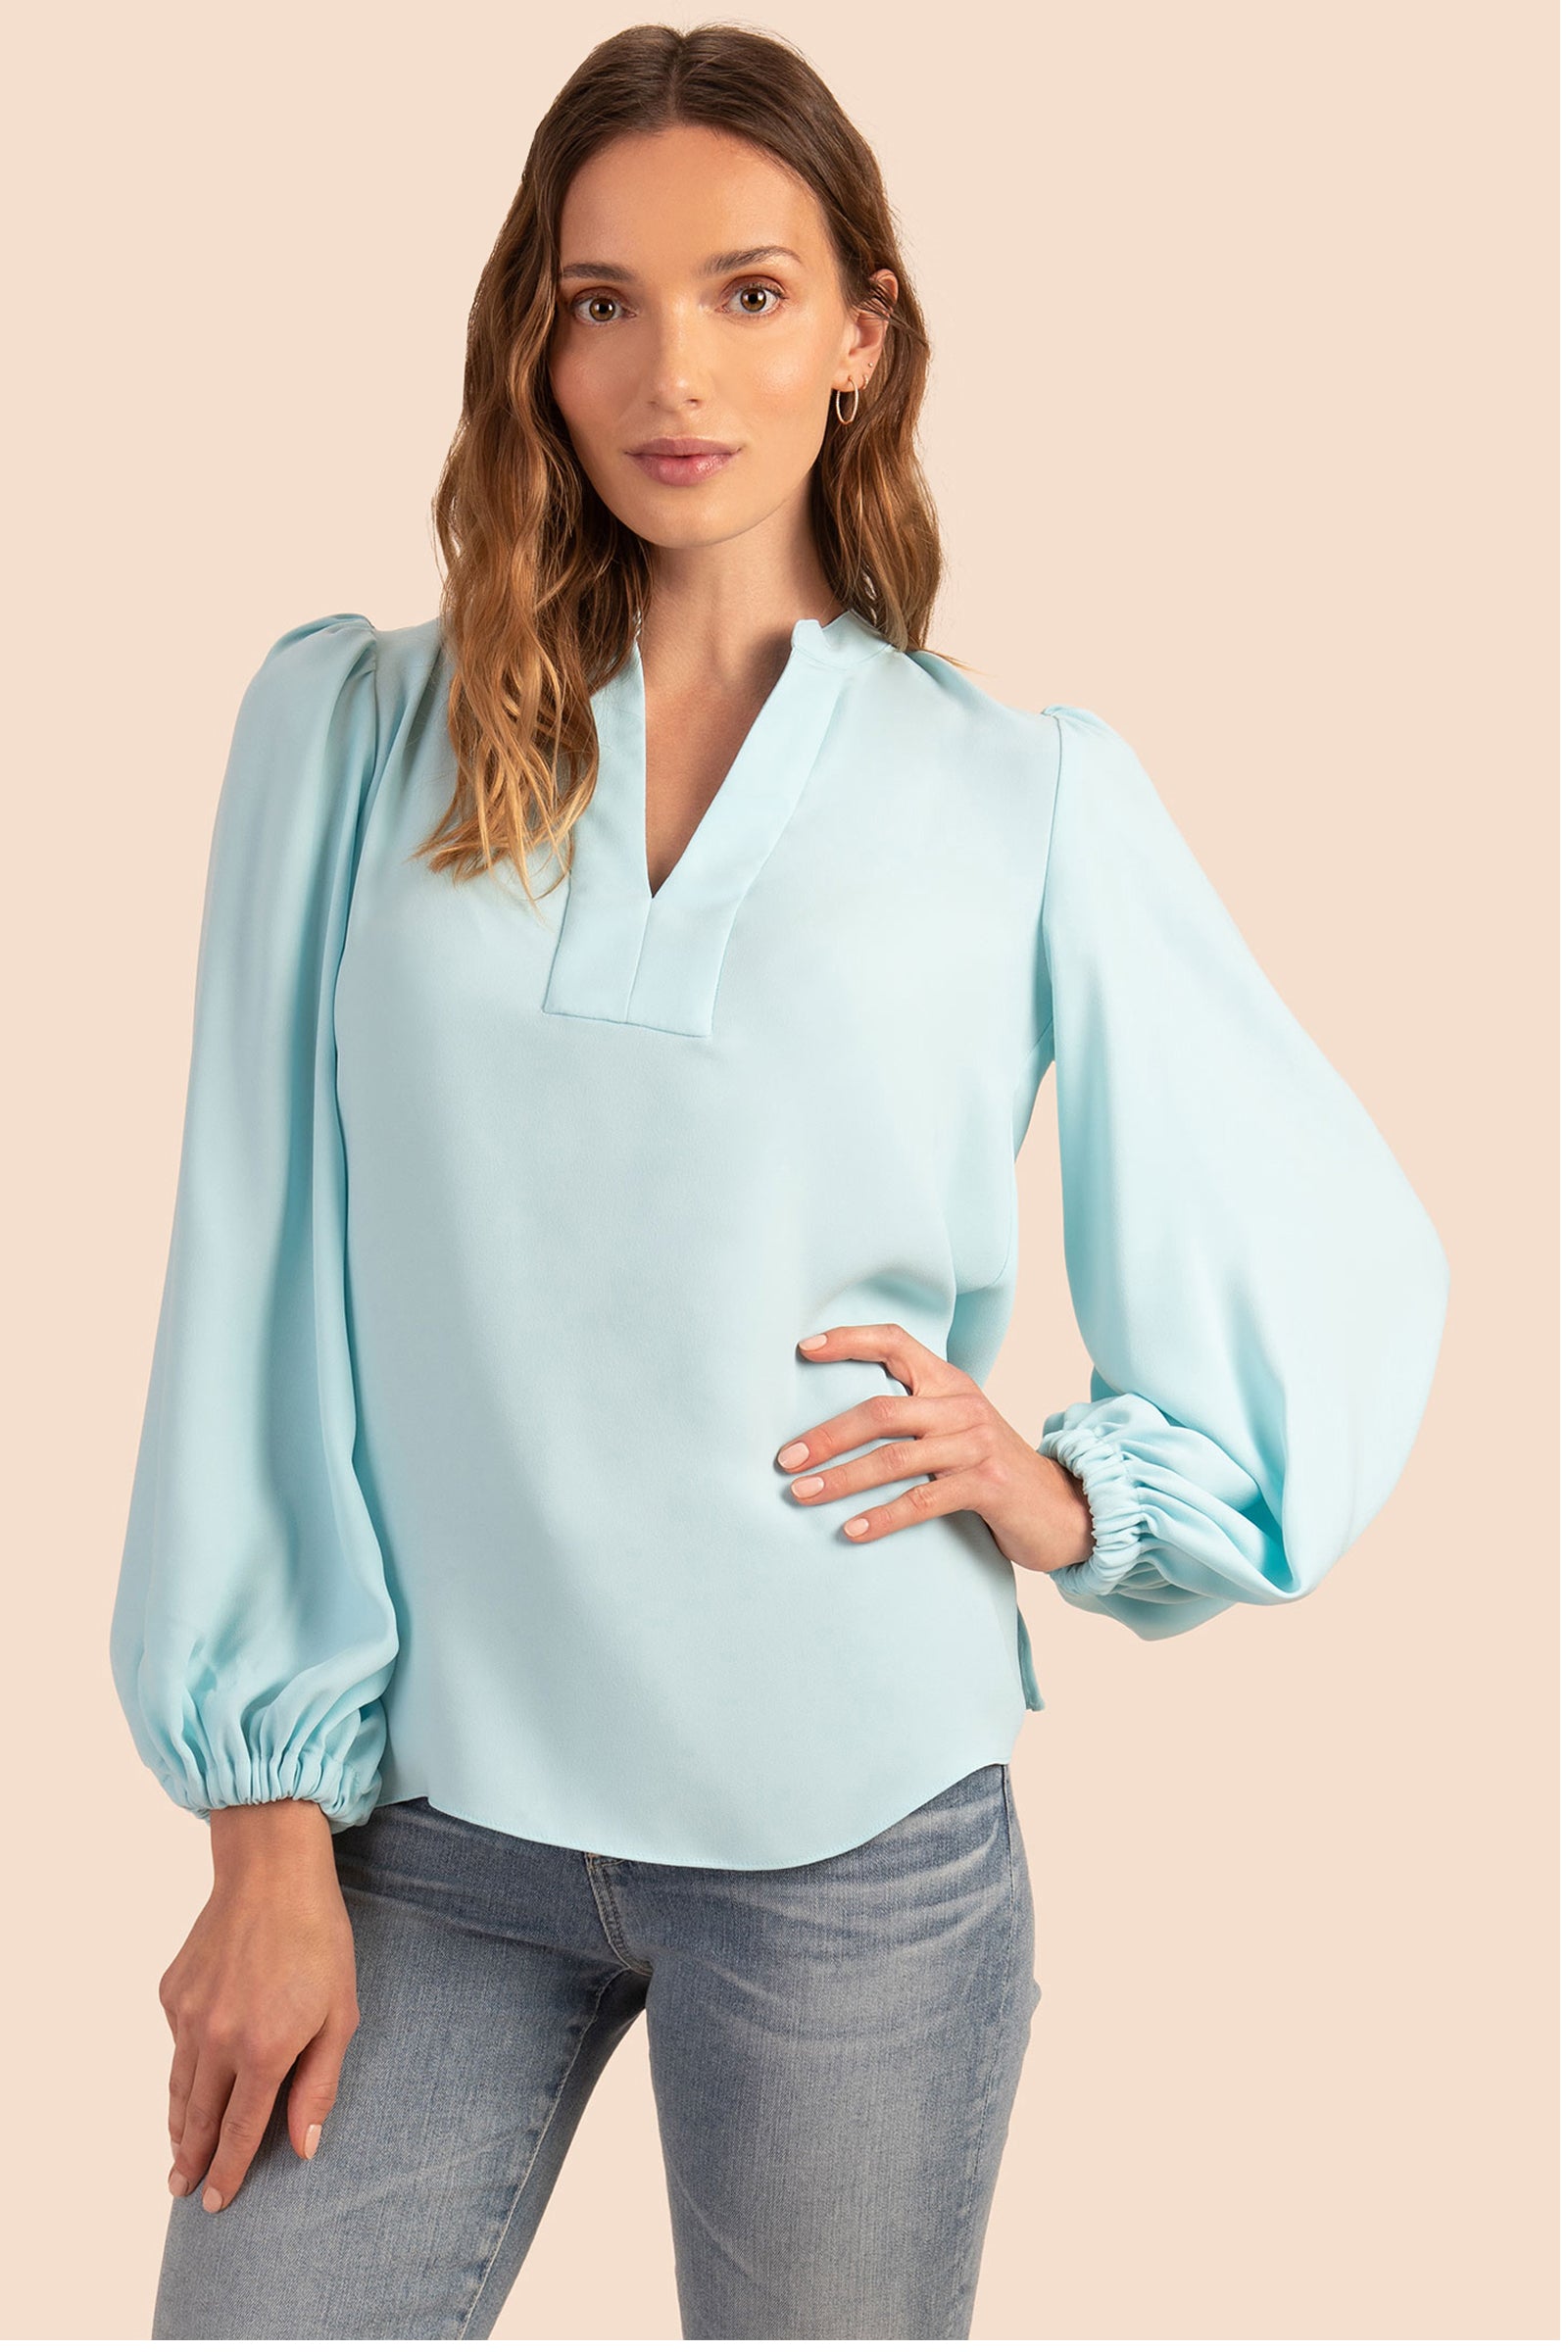 PRETTYGARDEN Women's Chiffon Blouse Solid Color Long Sleeve Button